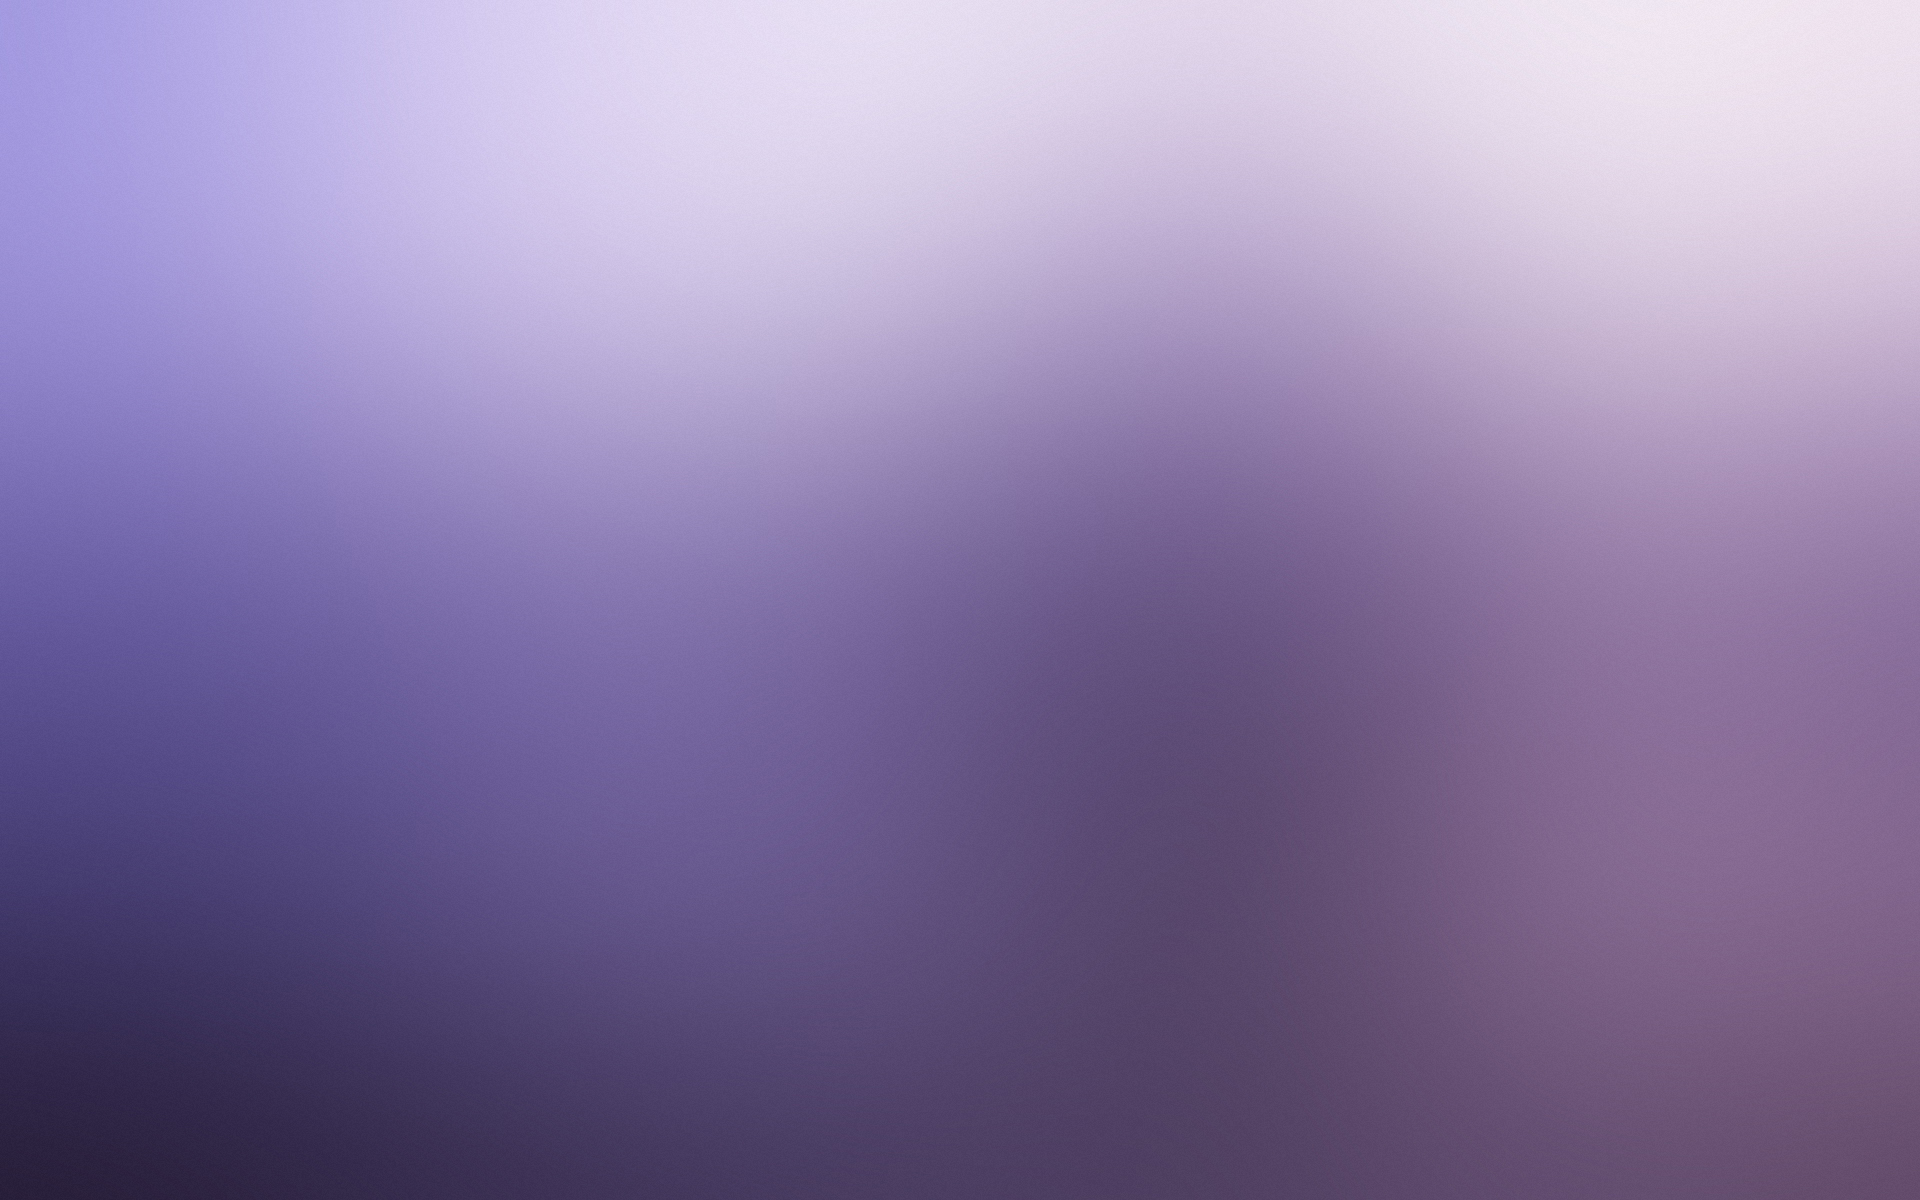 Minimalistic purple simple background wallpaper - (#182044) - High ...